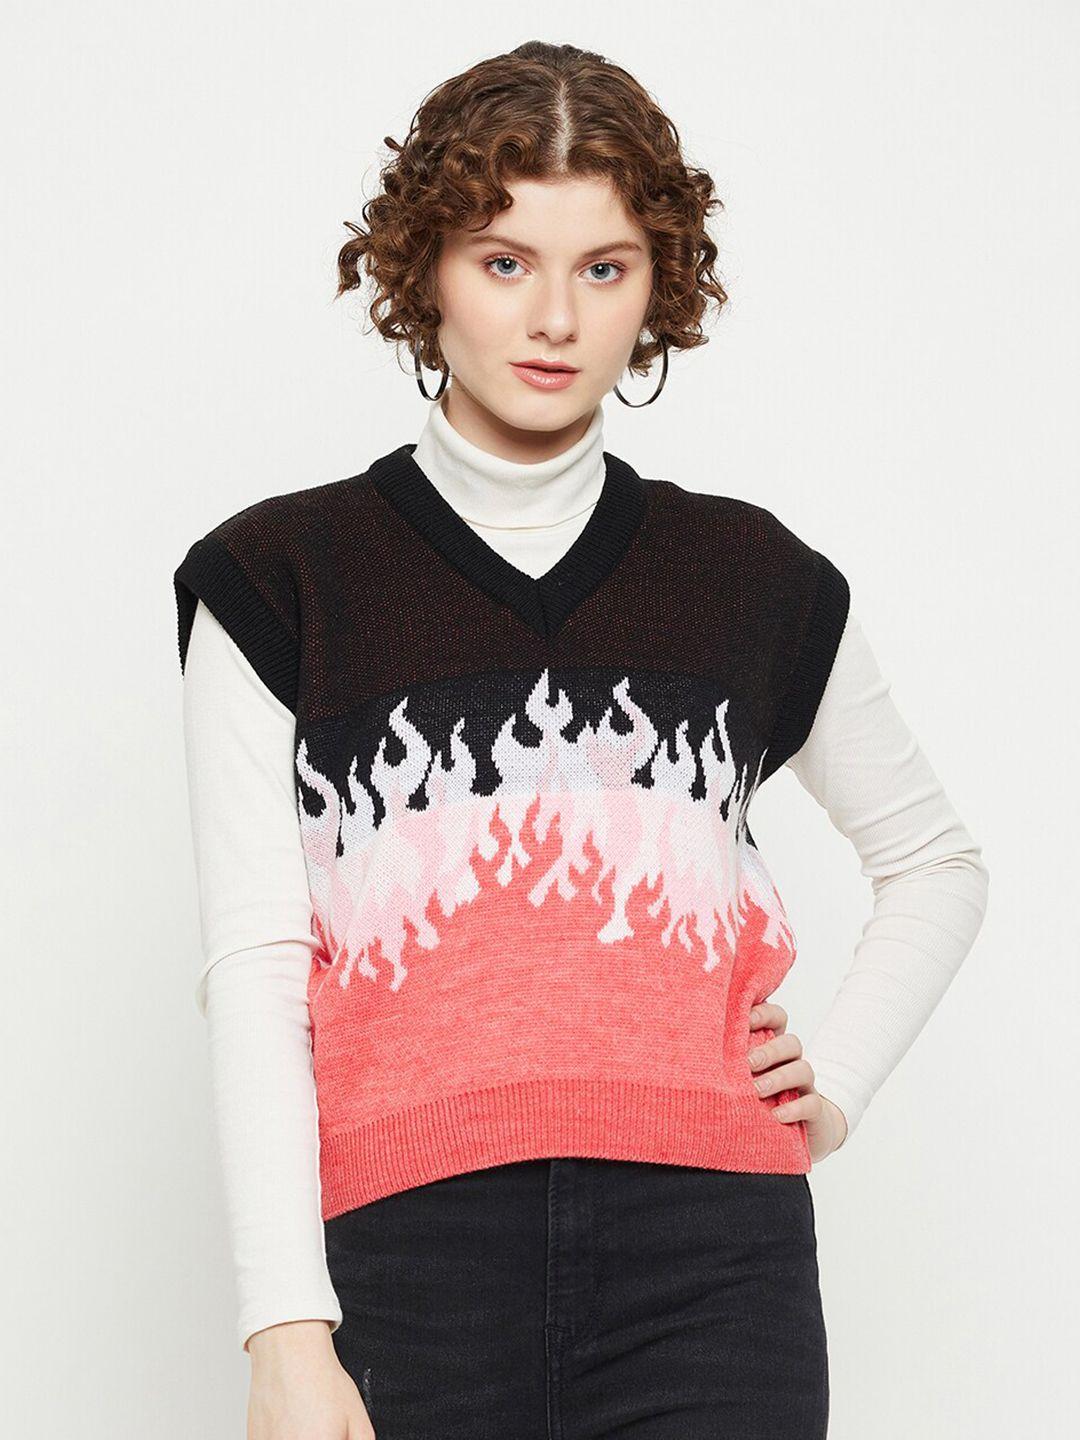 kasma abstract printed woollen sweater vest